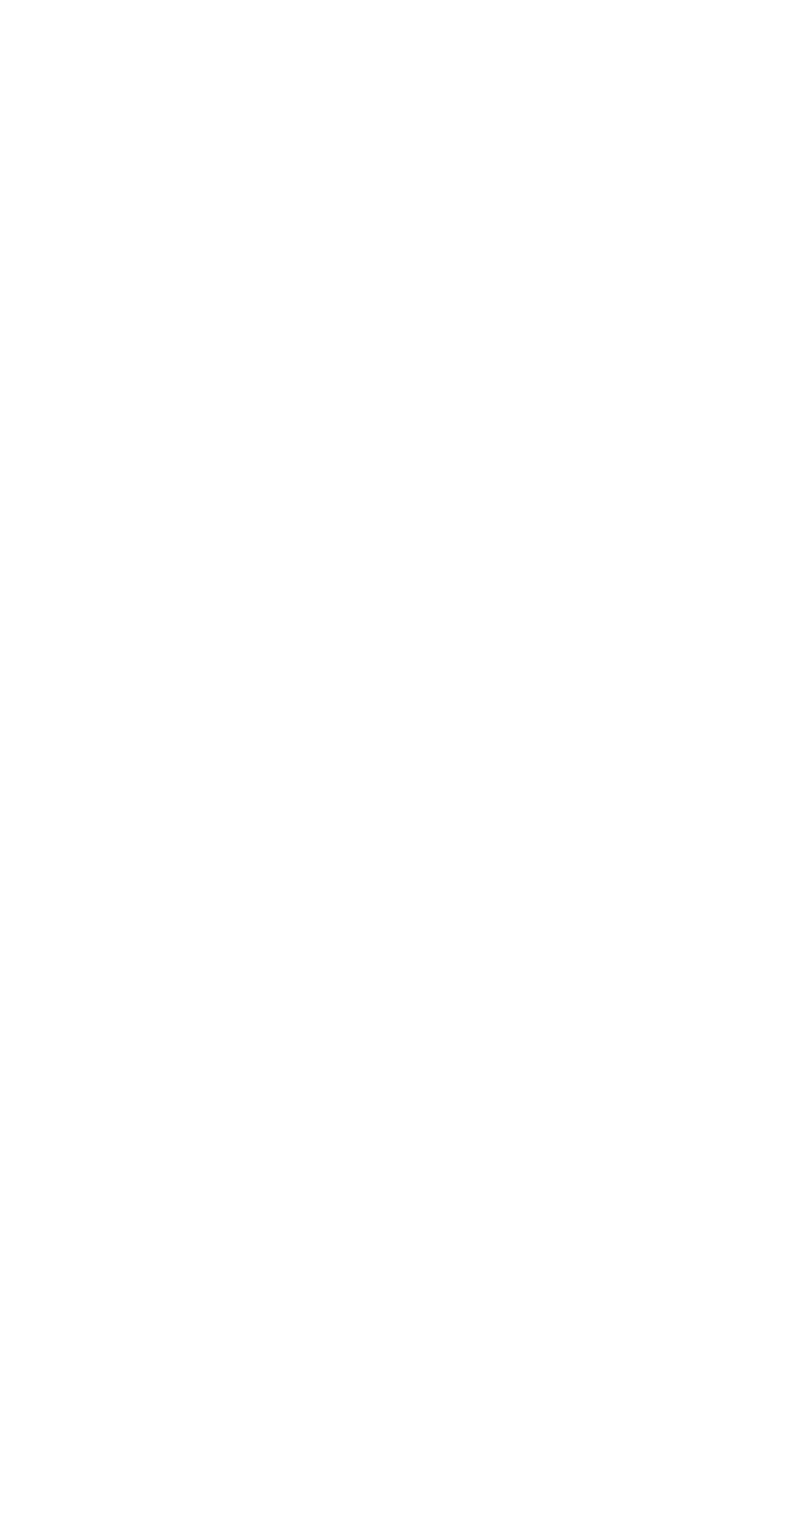 Tapinator logo for dark backgrounds (transparent PNG)